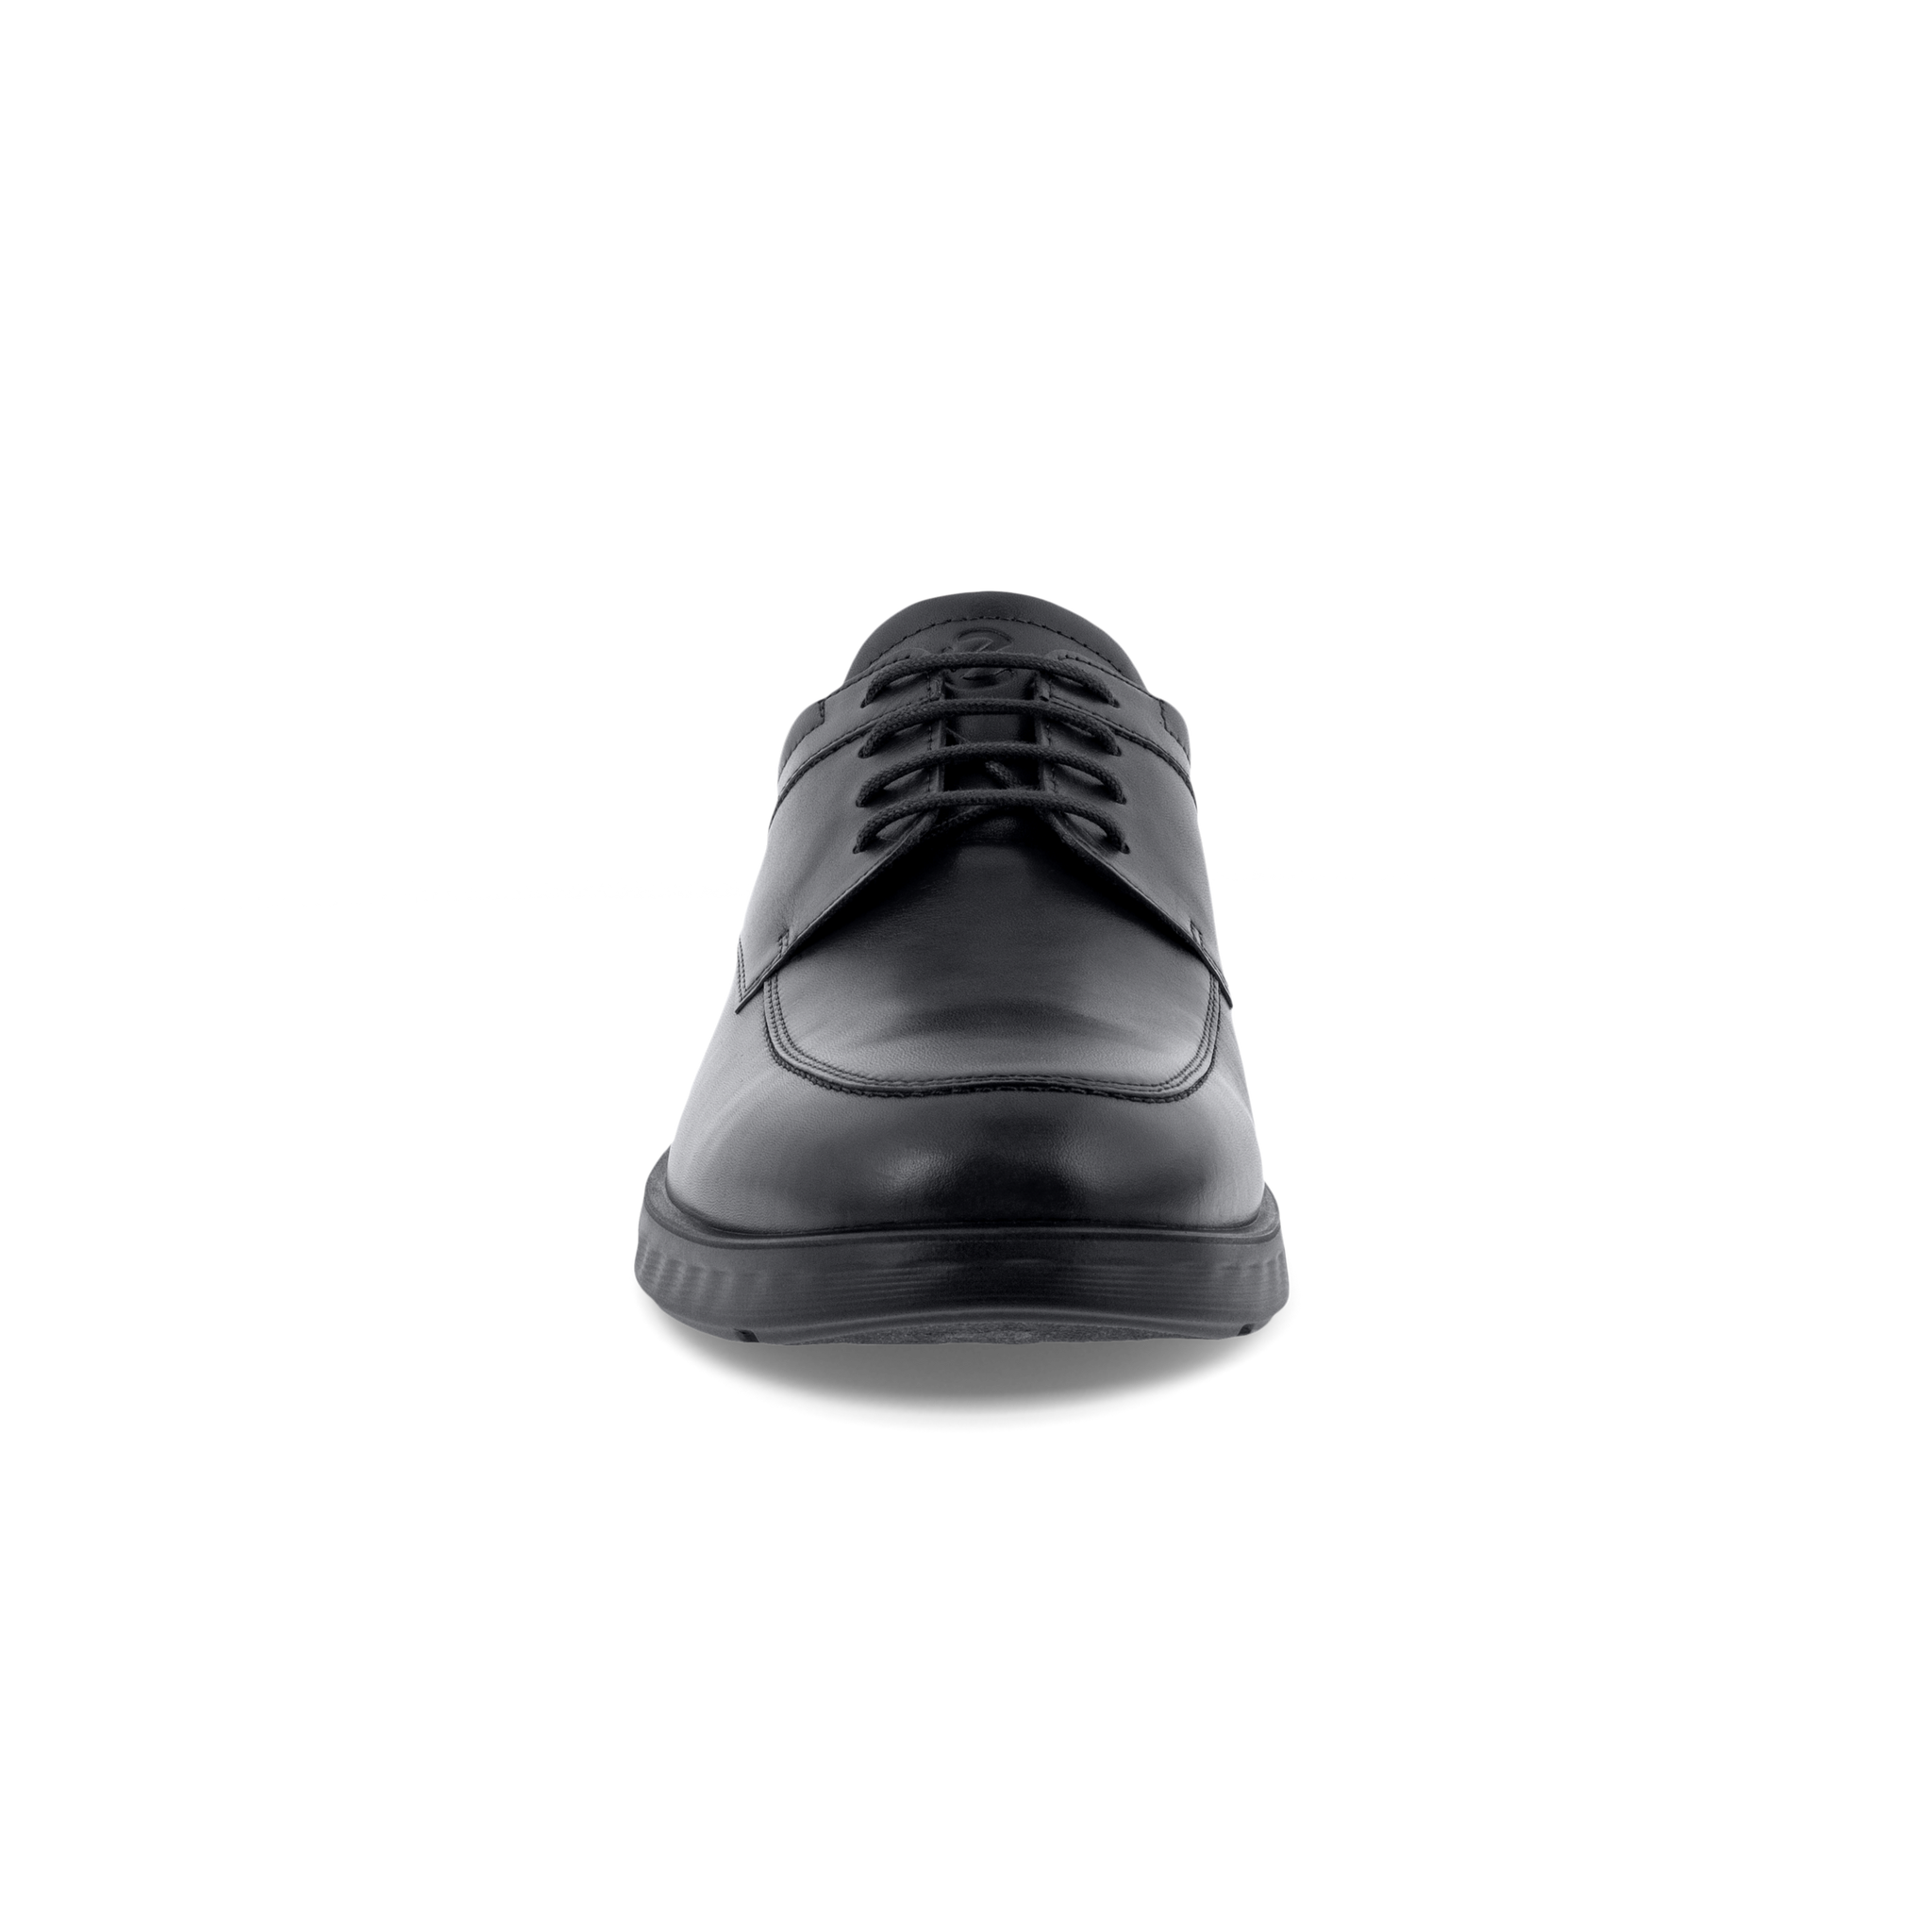 ECCO S Lite Hybrid (520304) - Mens Formal Shoe in Black | ECCO Shoes |Wisemans | Bantry | Shoe Shop | West Cork | Ireland